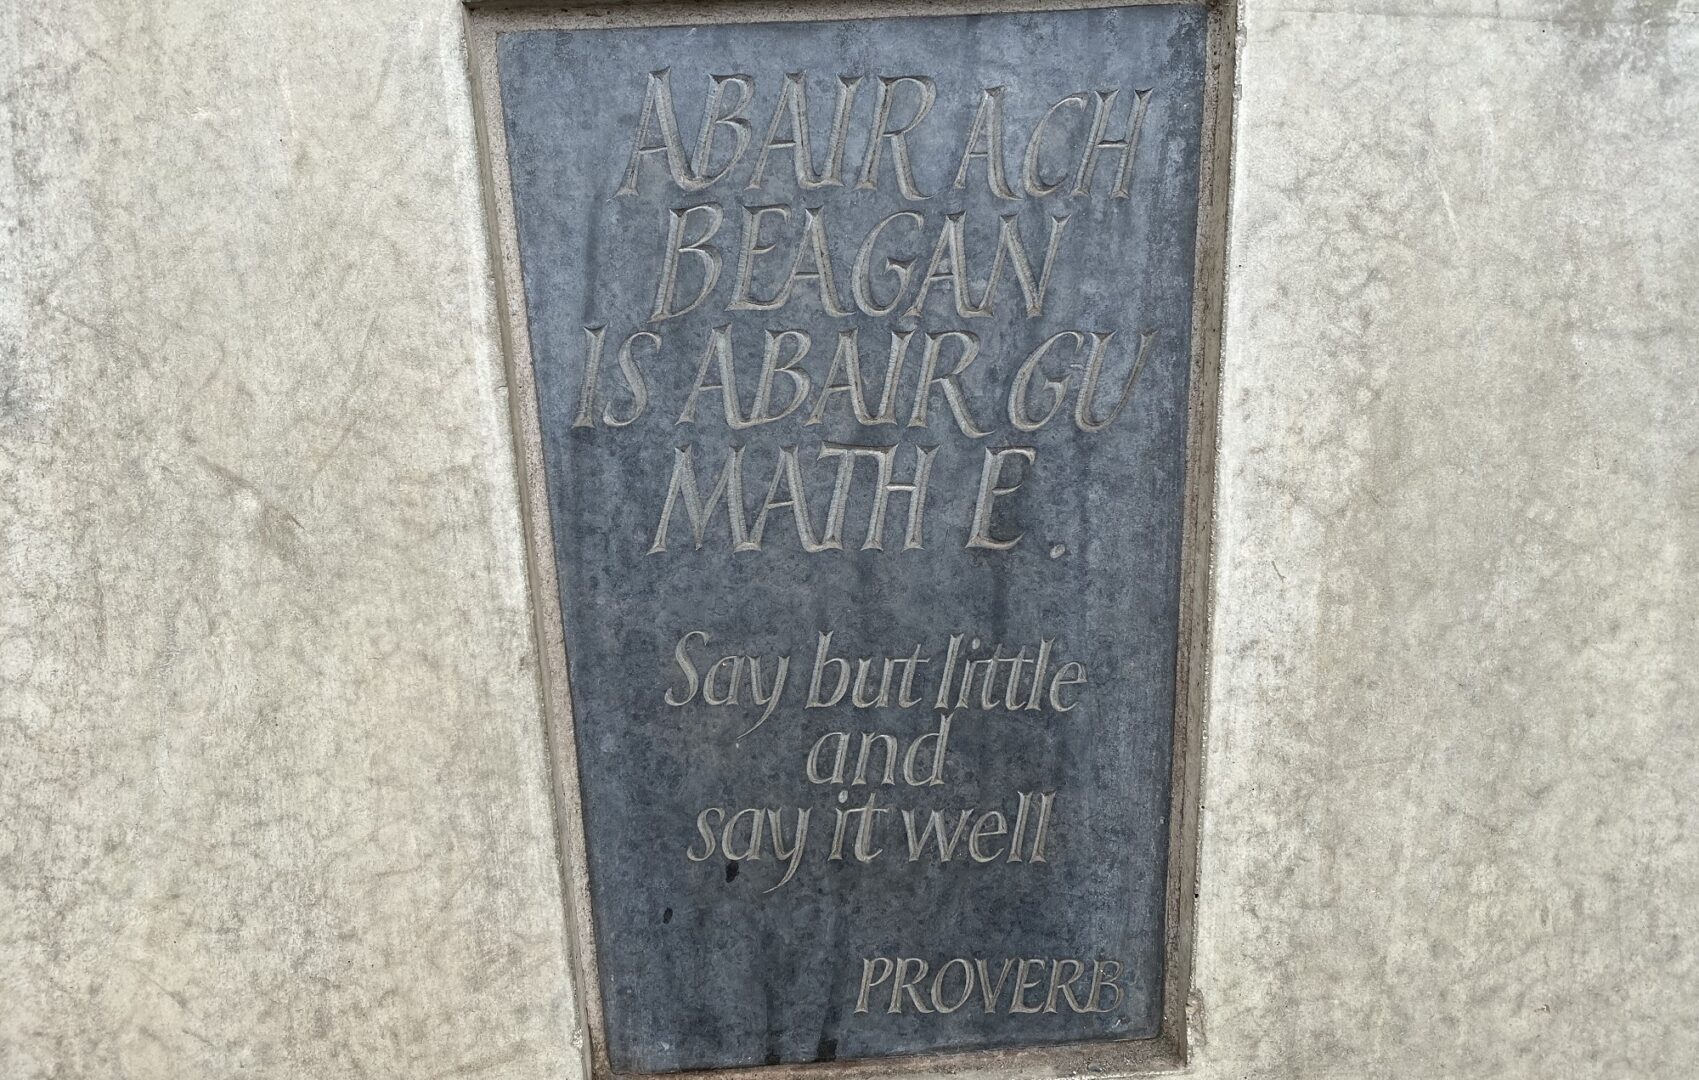 The Scottish Parliament Gaelic Proverb